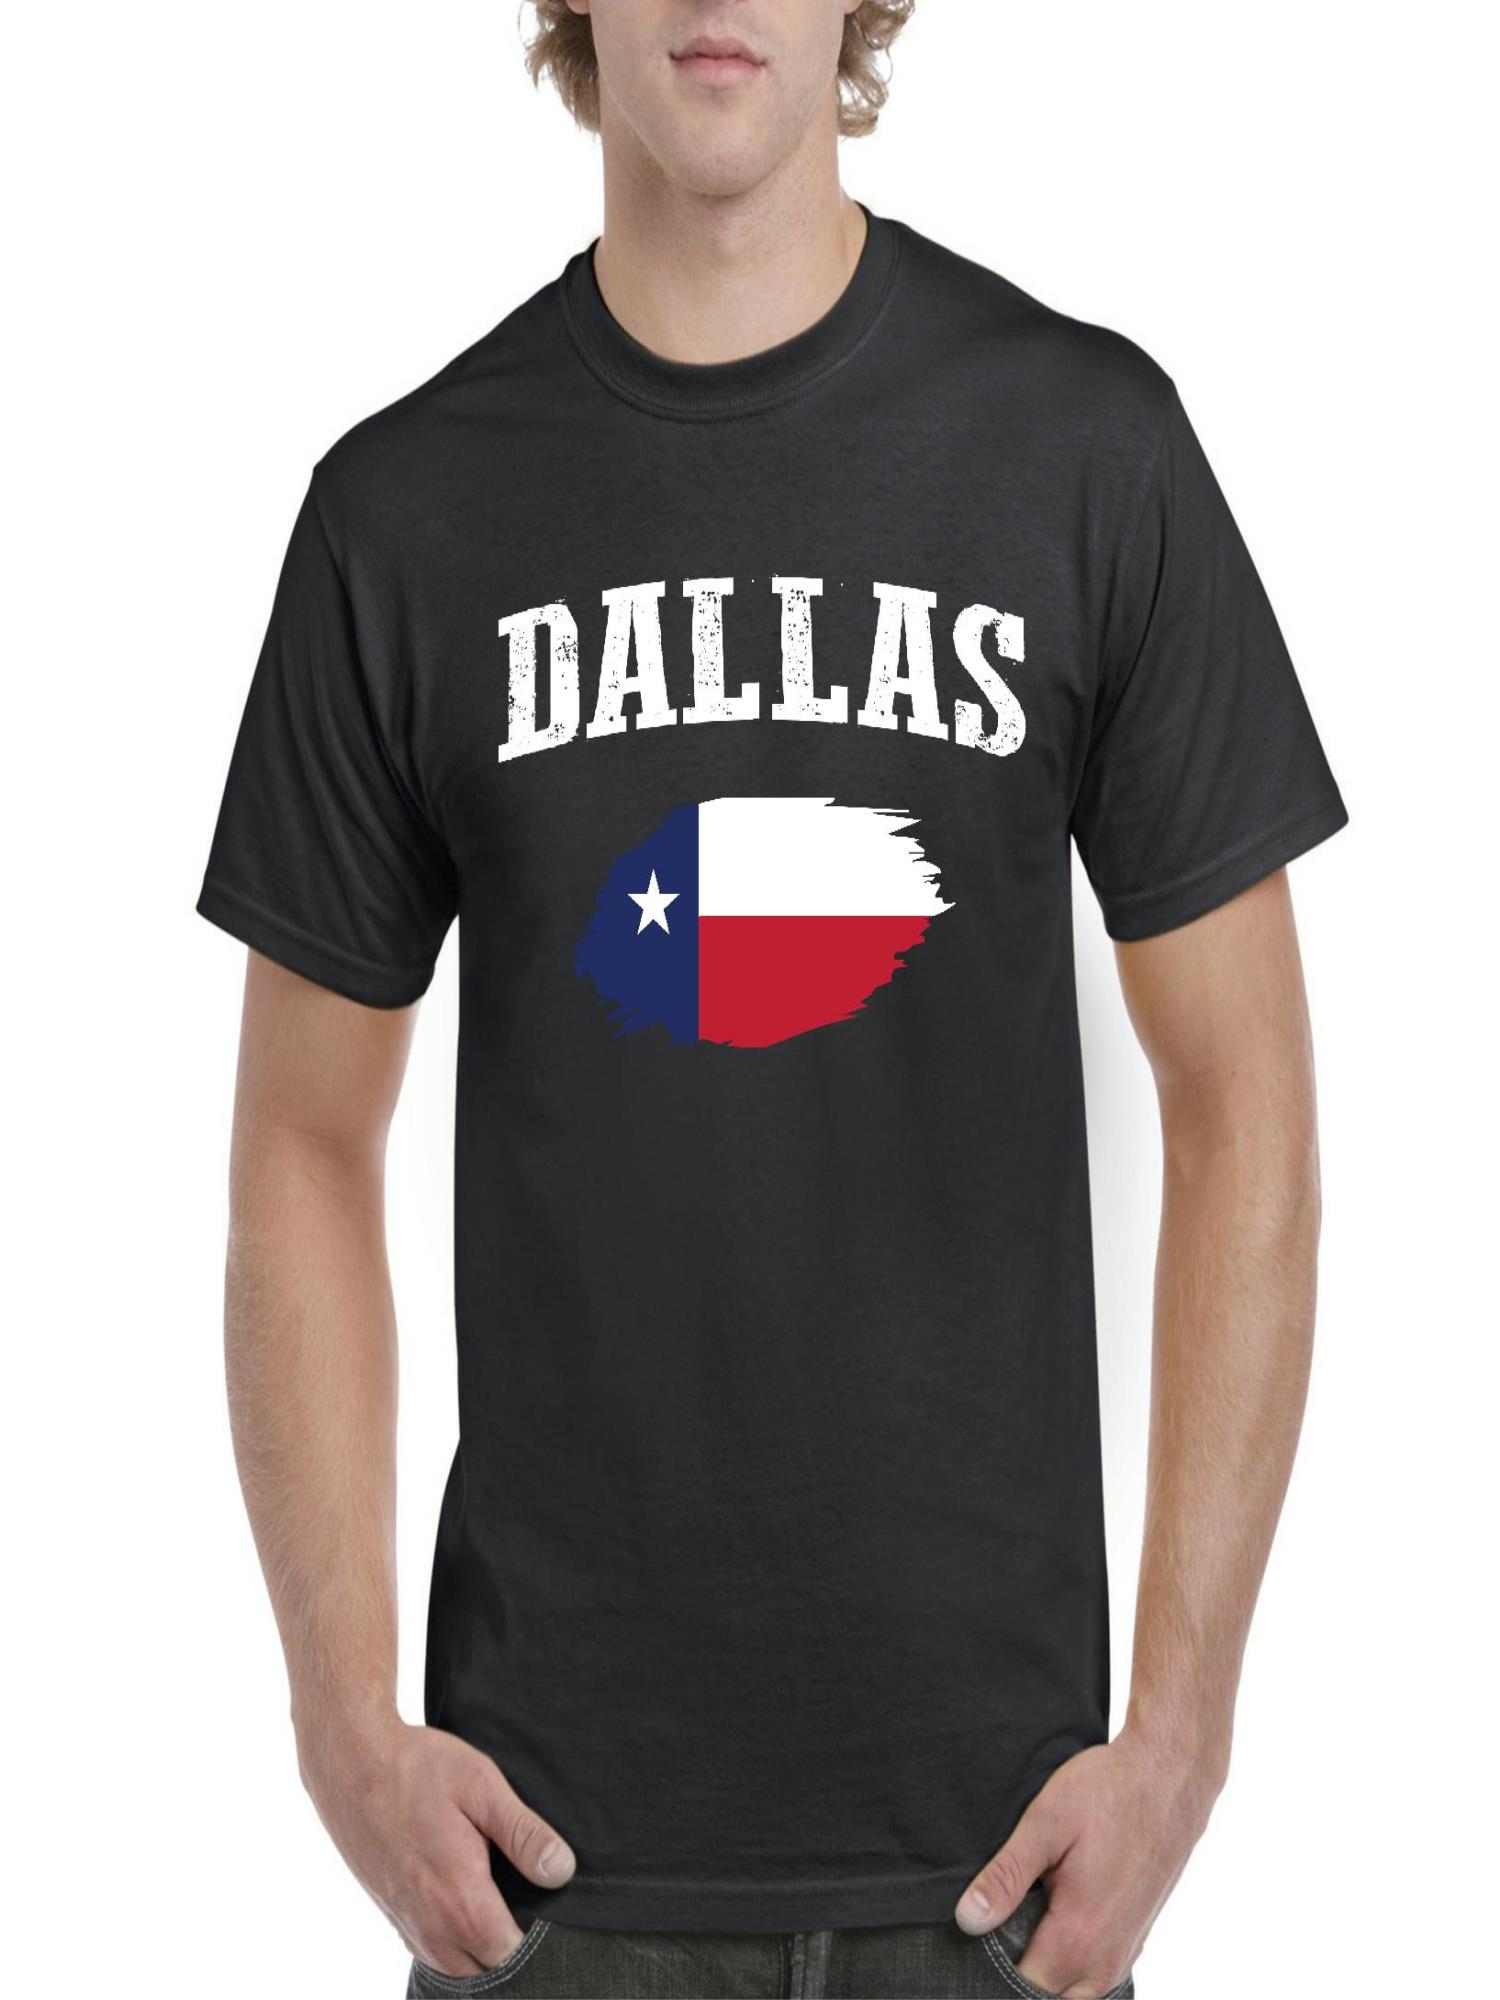 NIB - Men's T-Shirt Short Sleeve, up to Men Size 5XL - Dallas - image 1 of 5